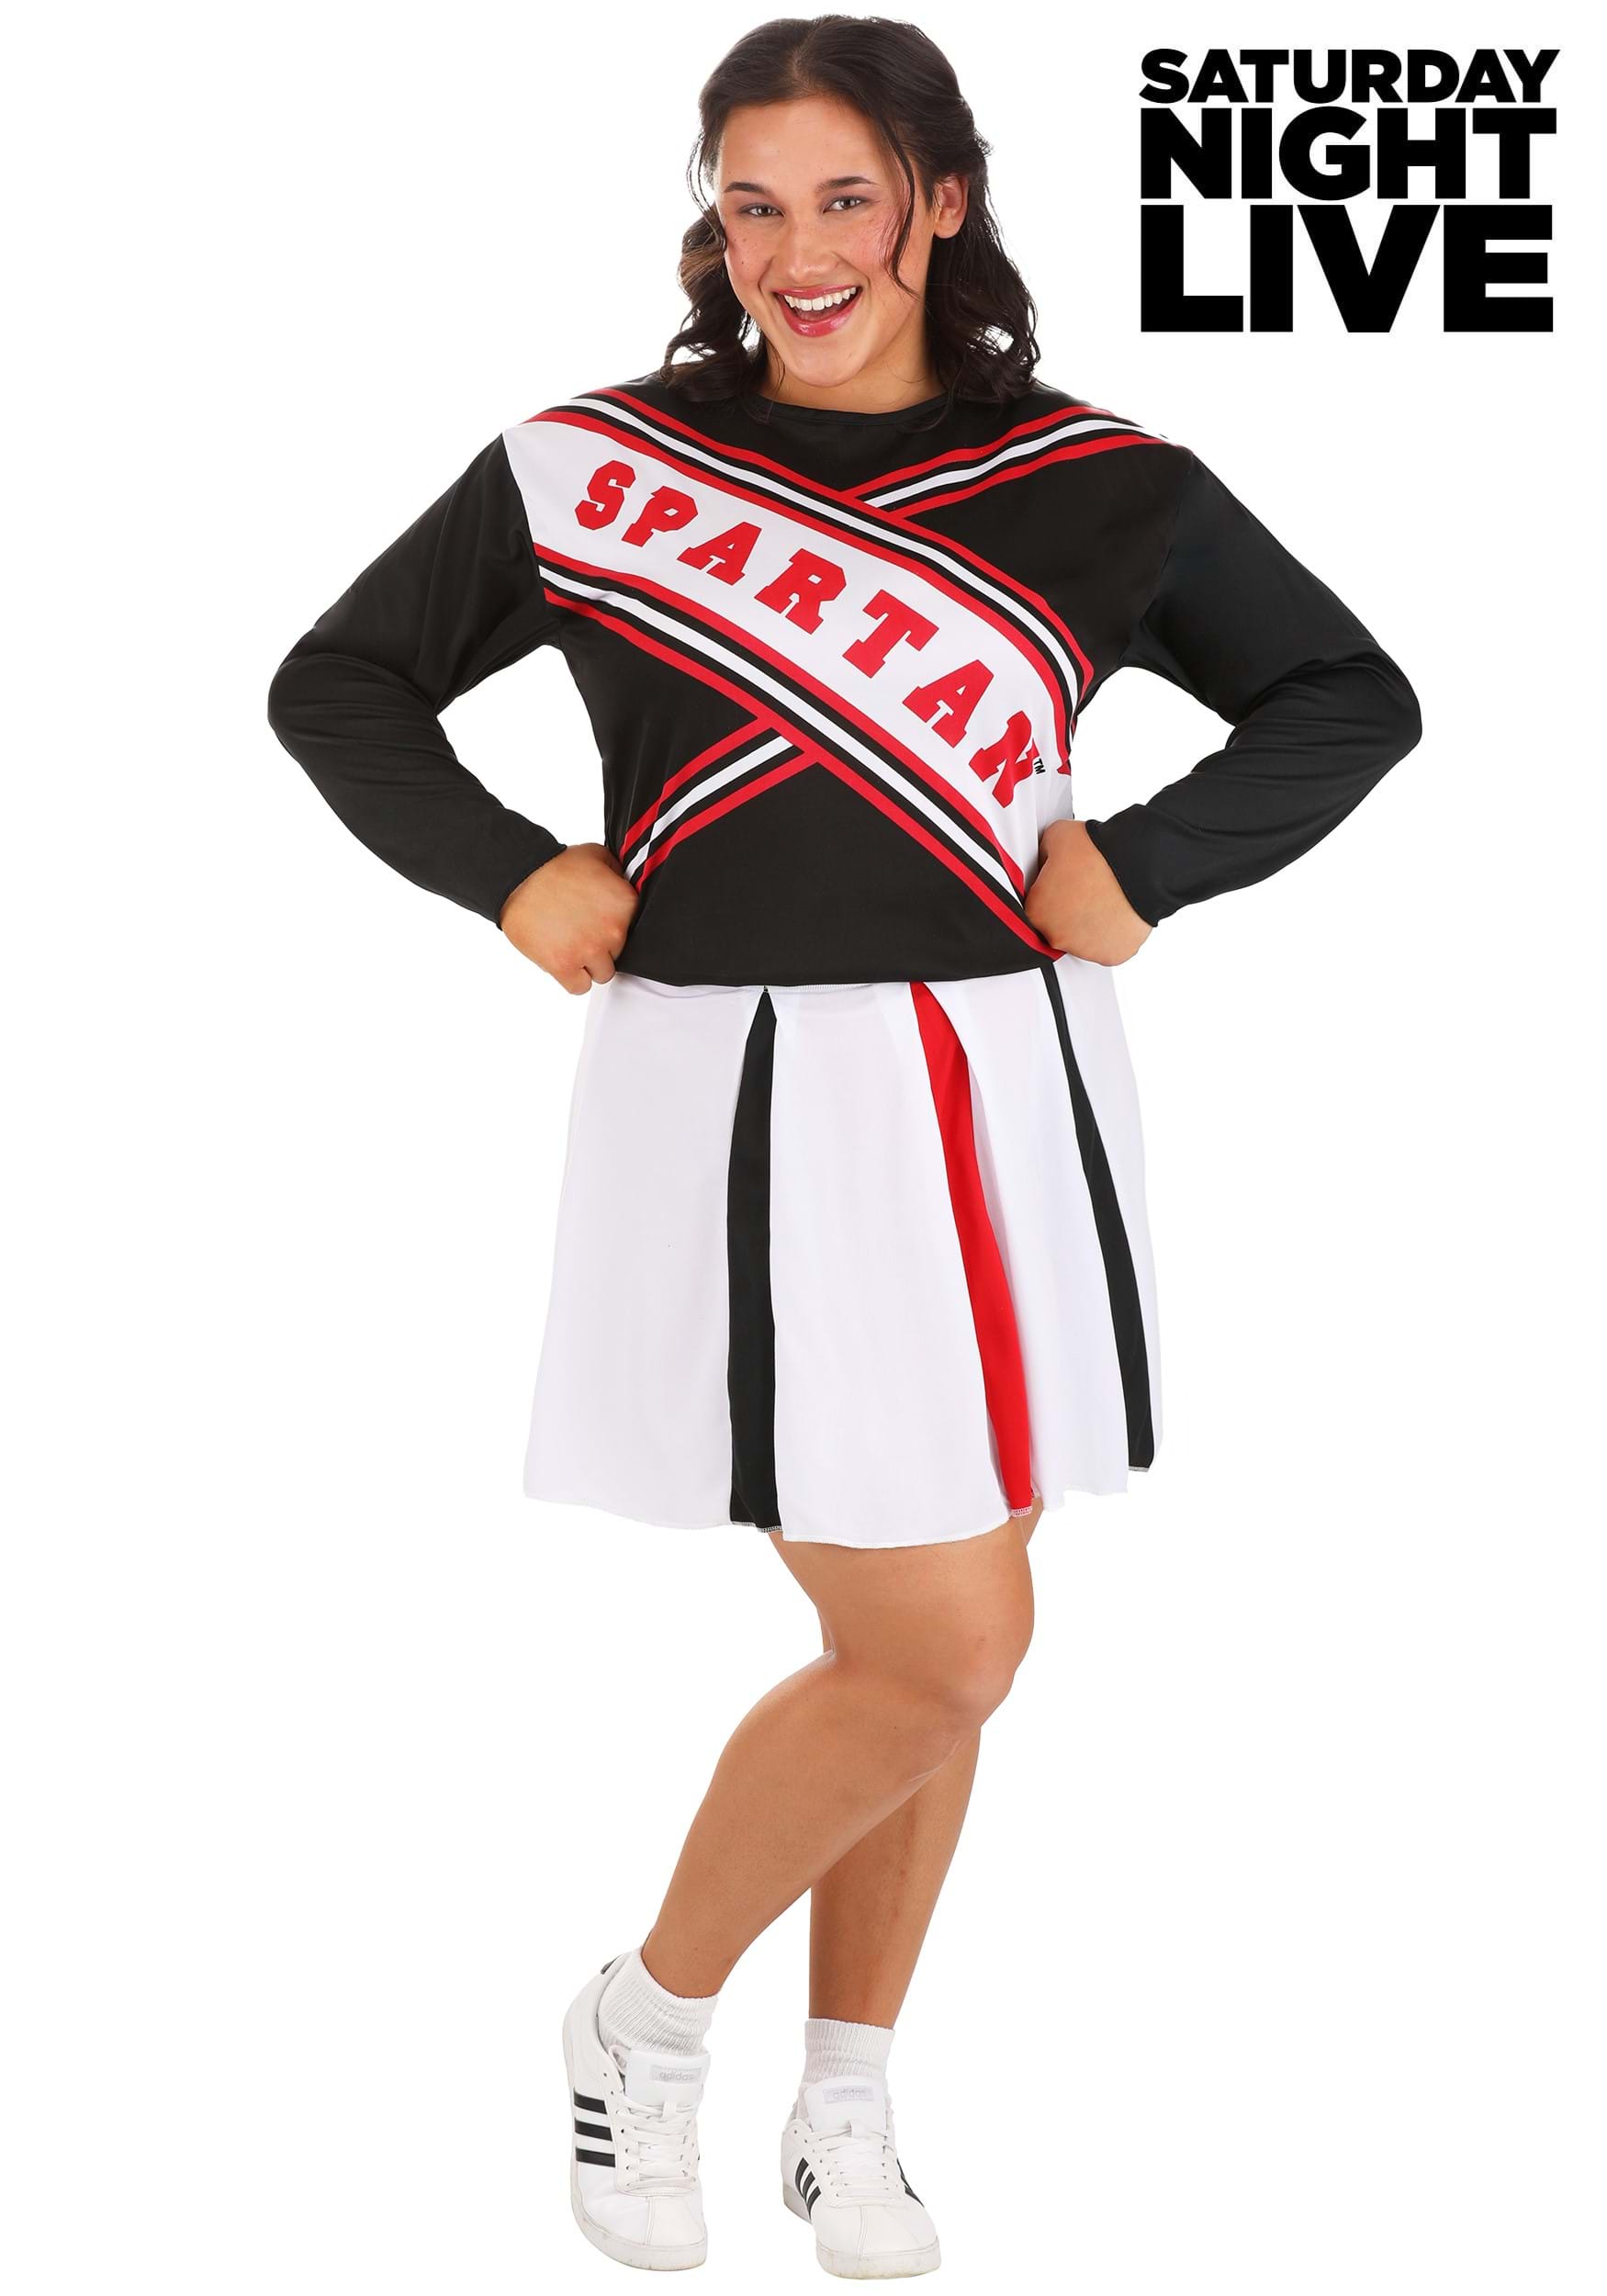 Plus Size Saturday Night Live Spartan Female Cheerleader Women's Costume